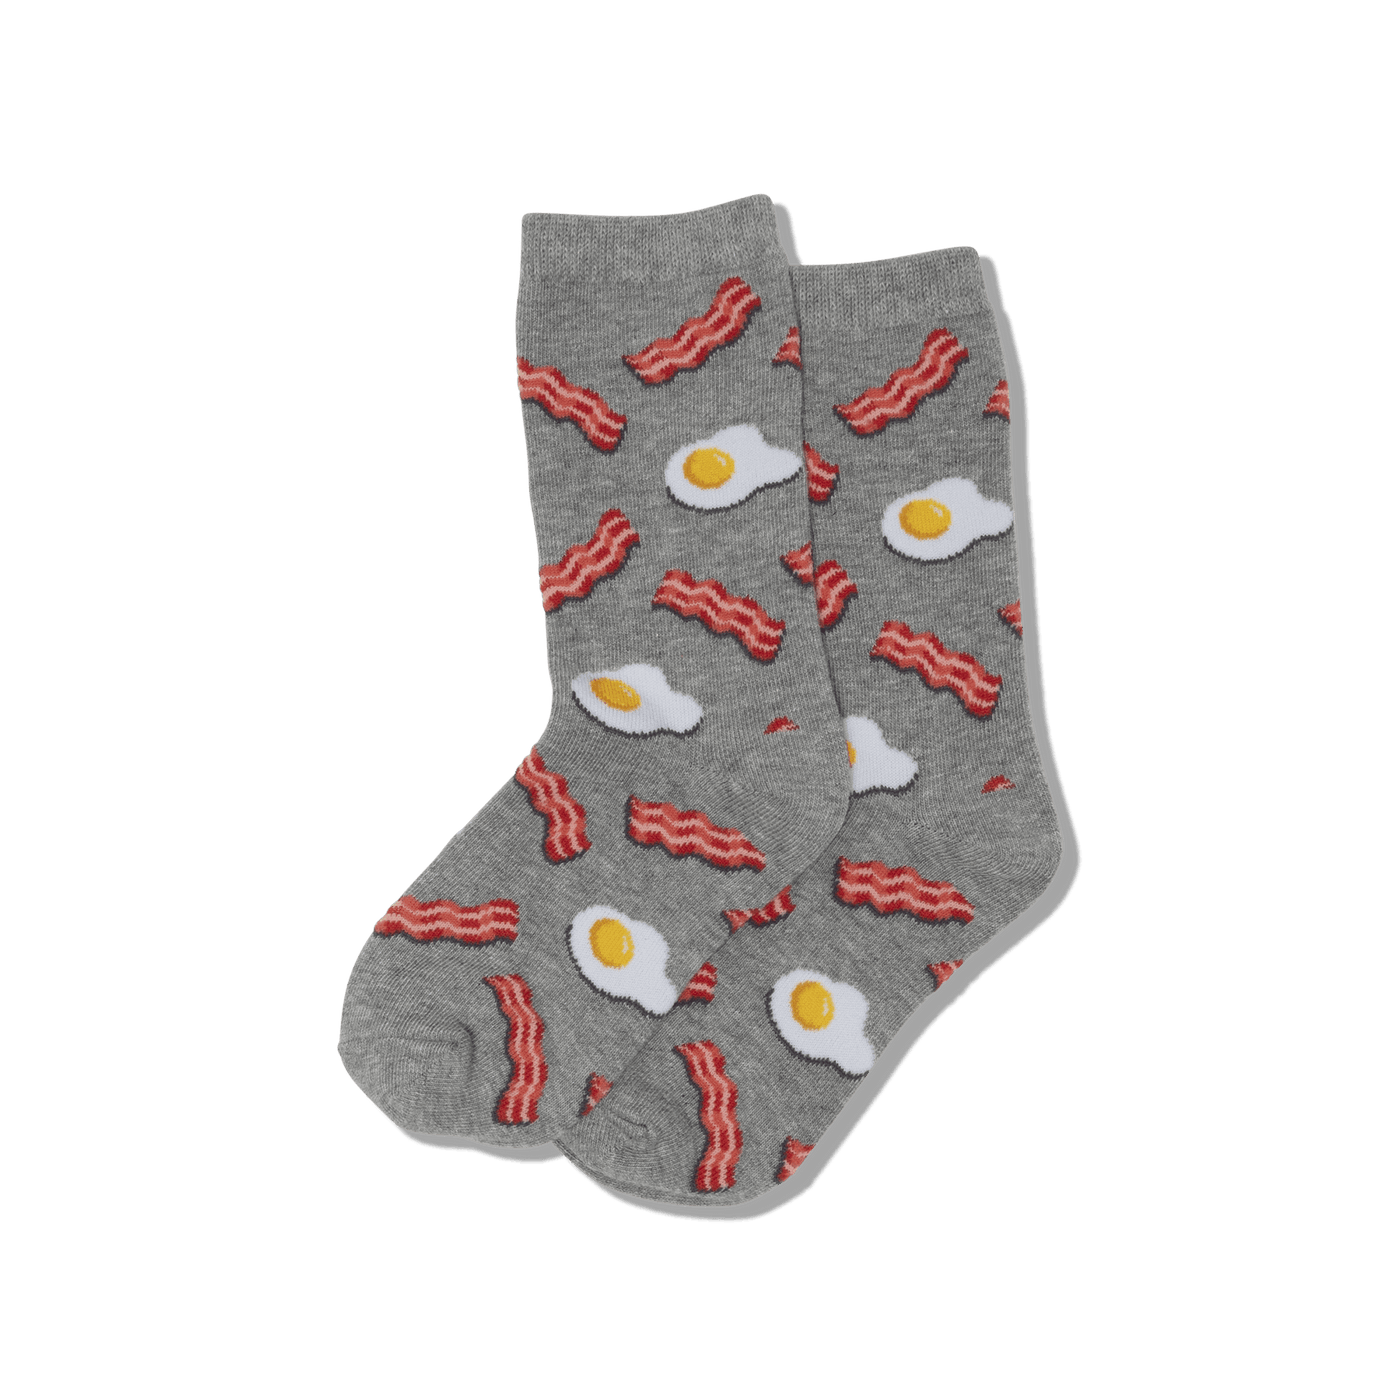 Kids "Eggs & Bacon" Crew Socks by Hot Sox